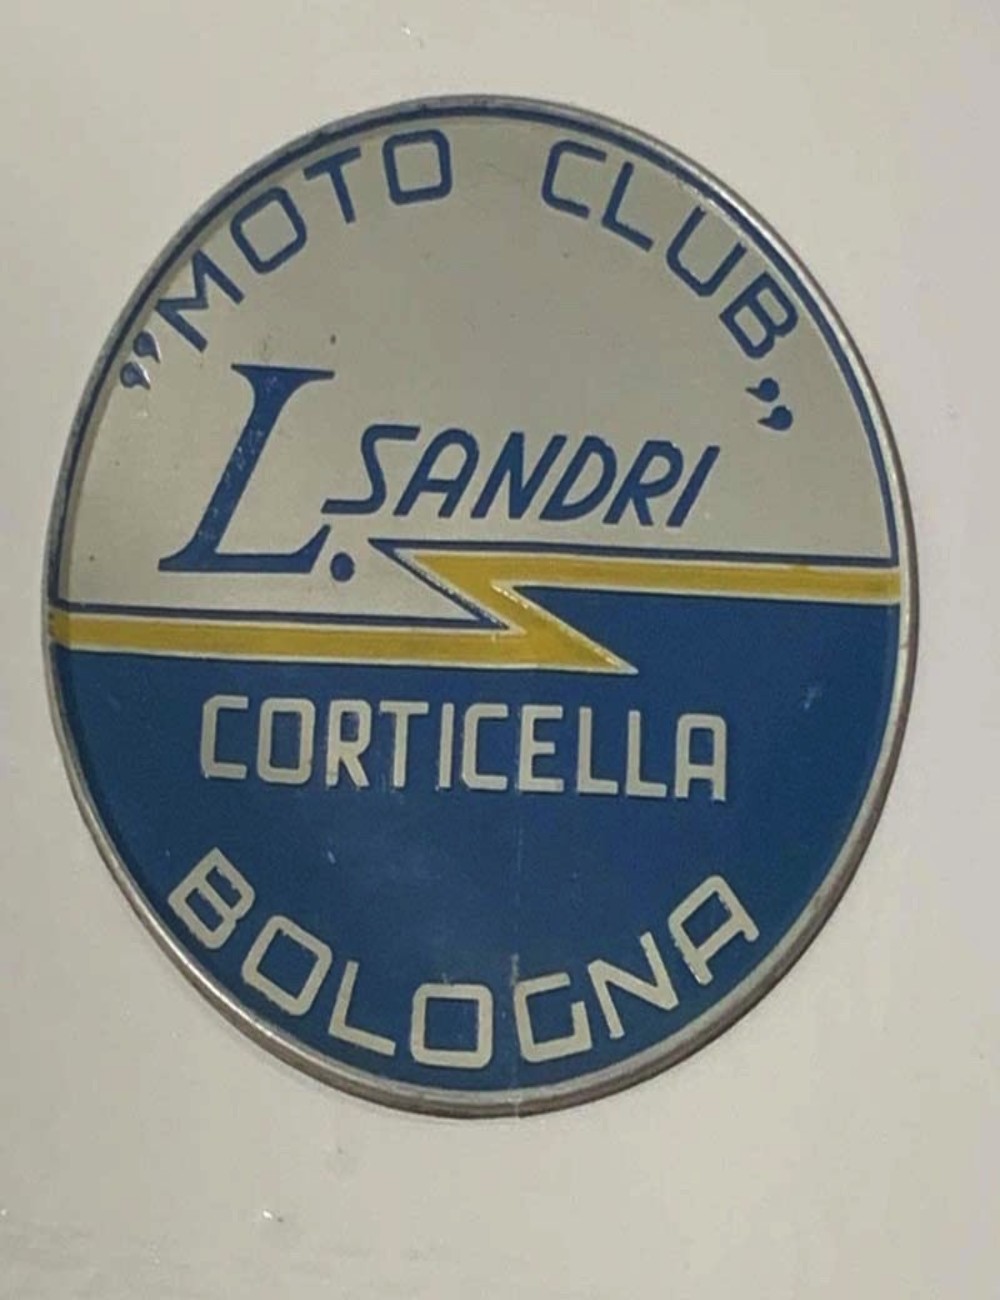 Targhetta concessionario Moto Club L. Sandri